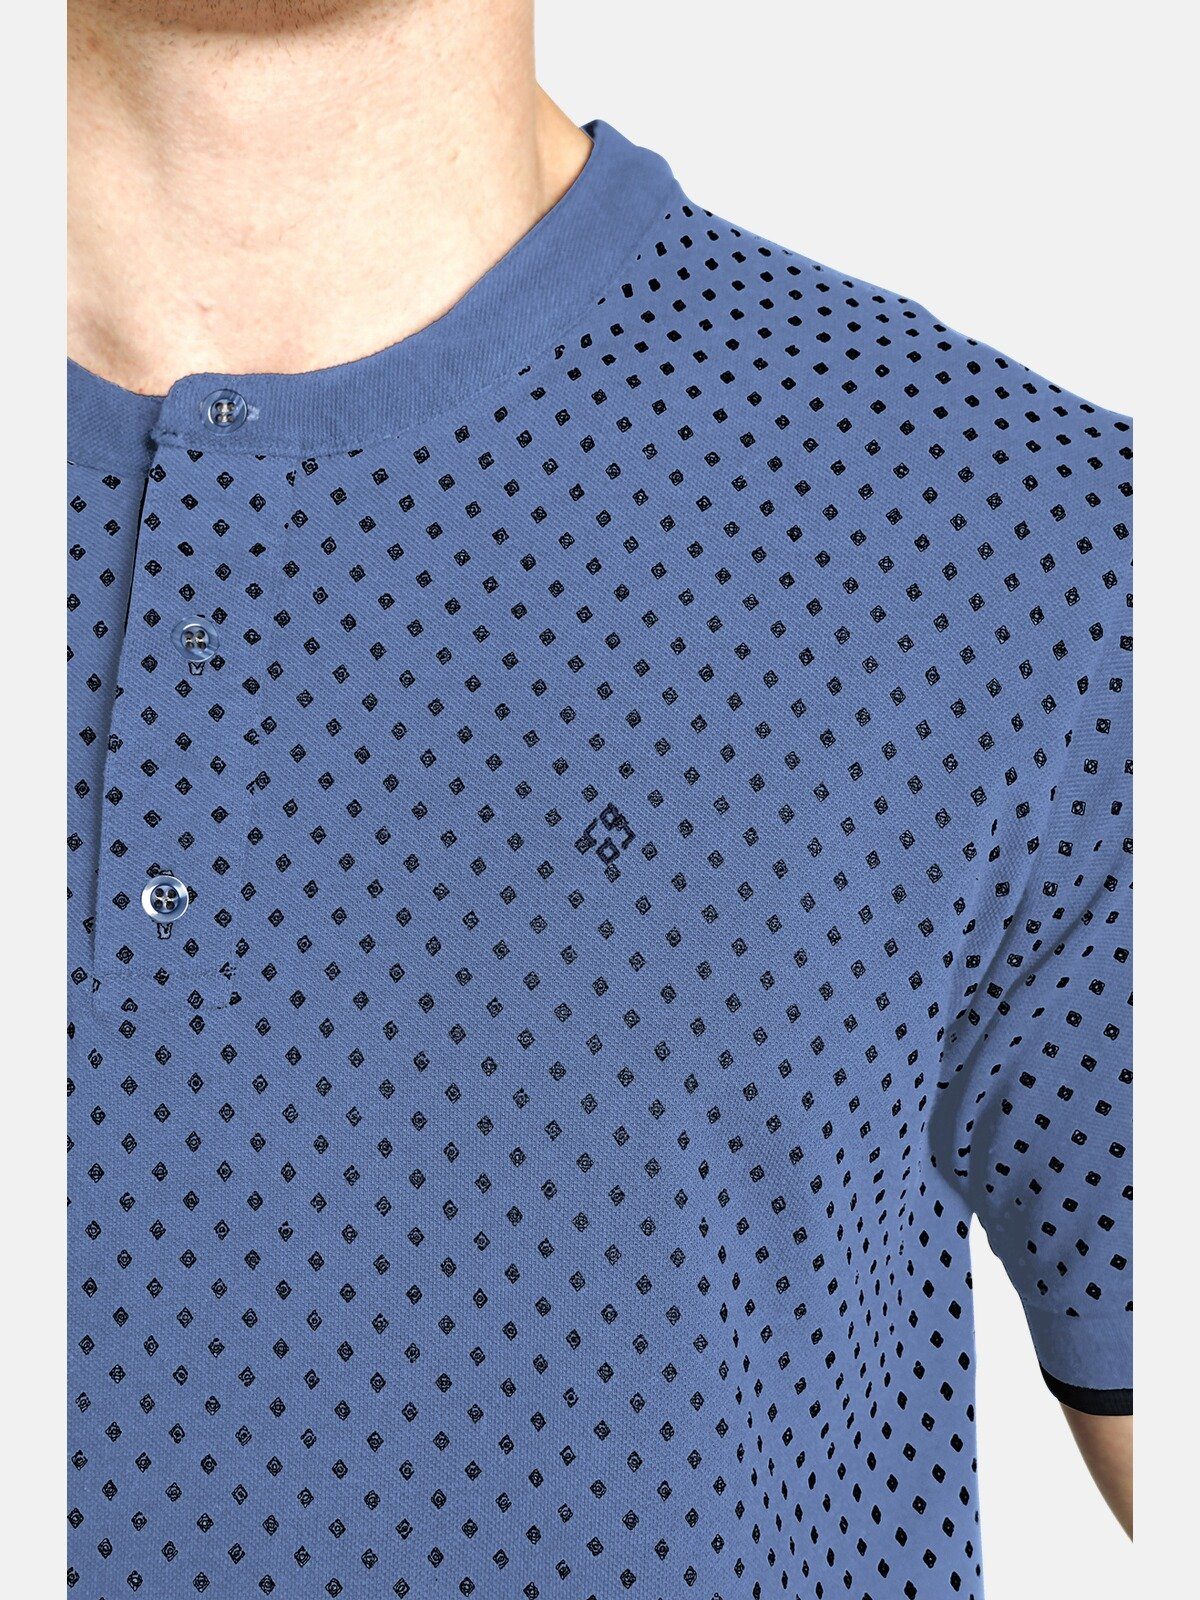 T-Shirt minimal hellblau in Charles Rautendesign DUKE Colby COLIN